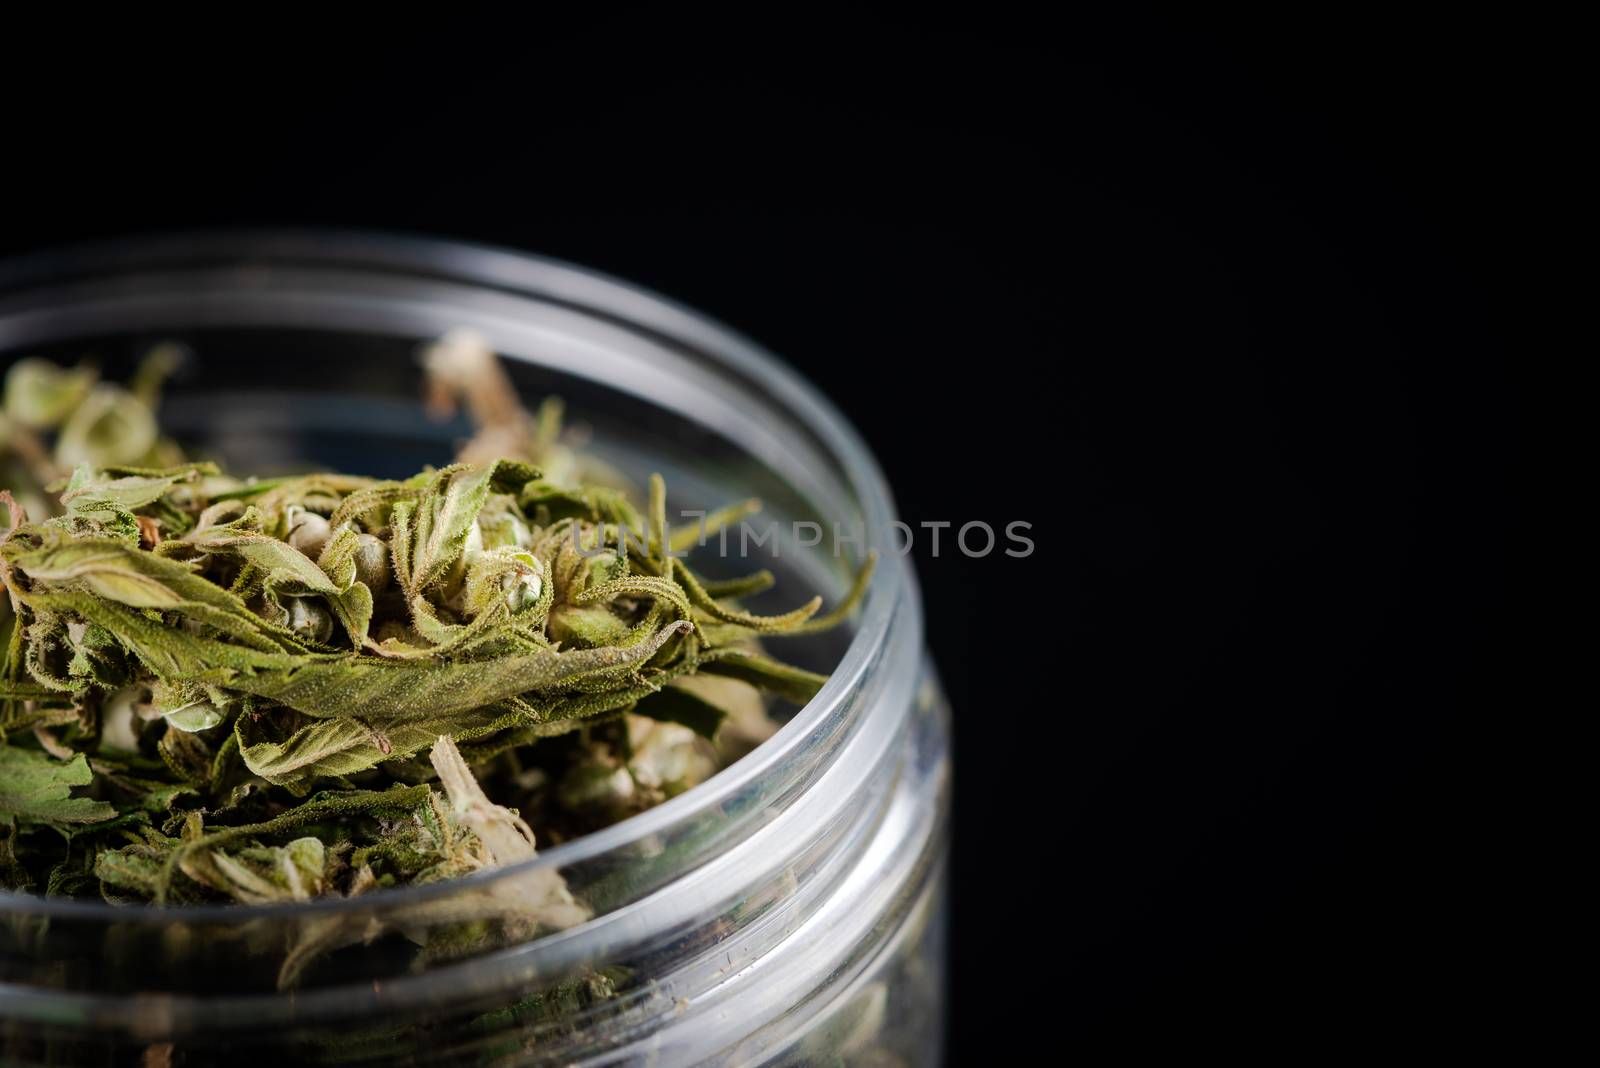 Sativa Indica or Cannabis Marijuana Flower Buds in Glass Jar. re by merc67